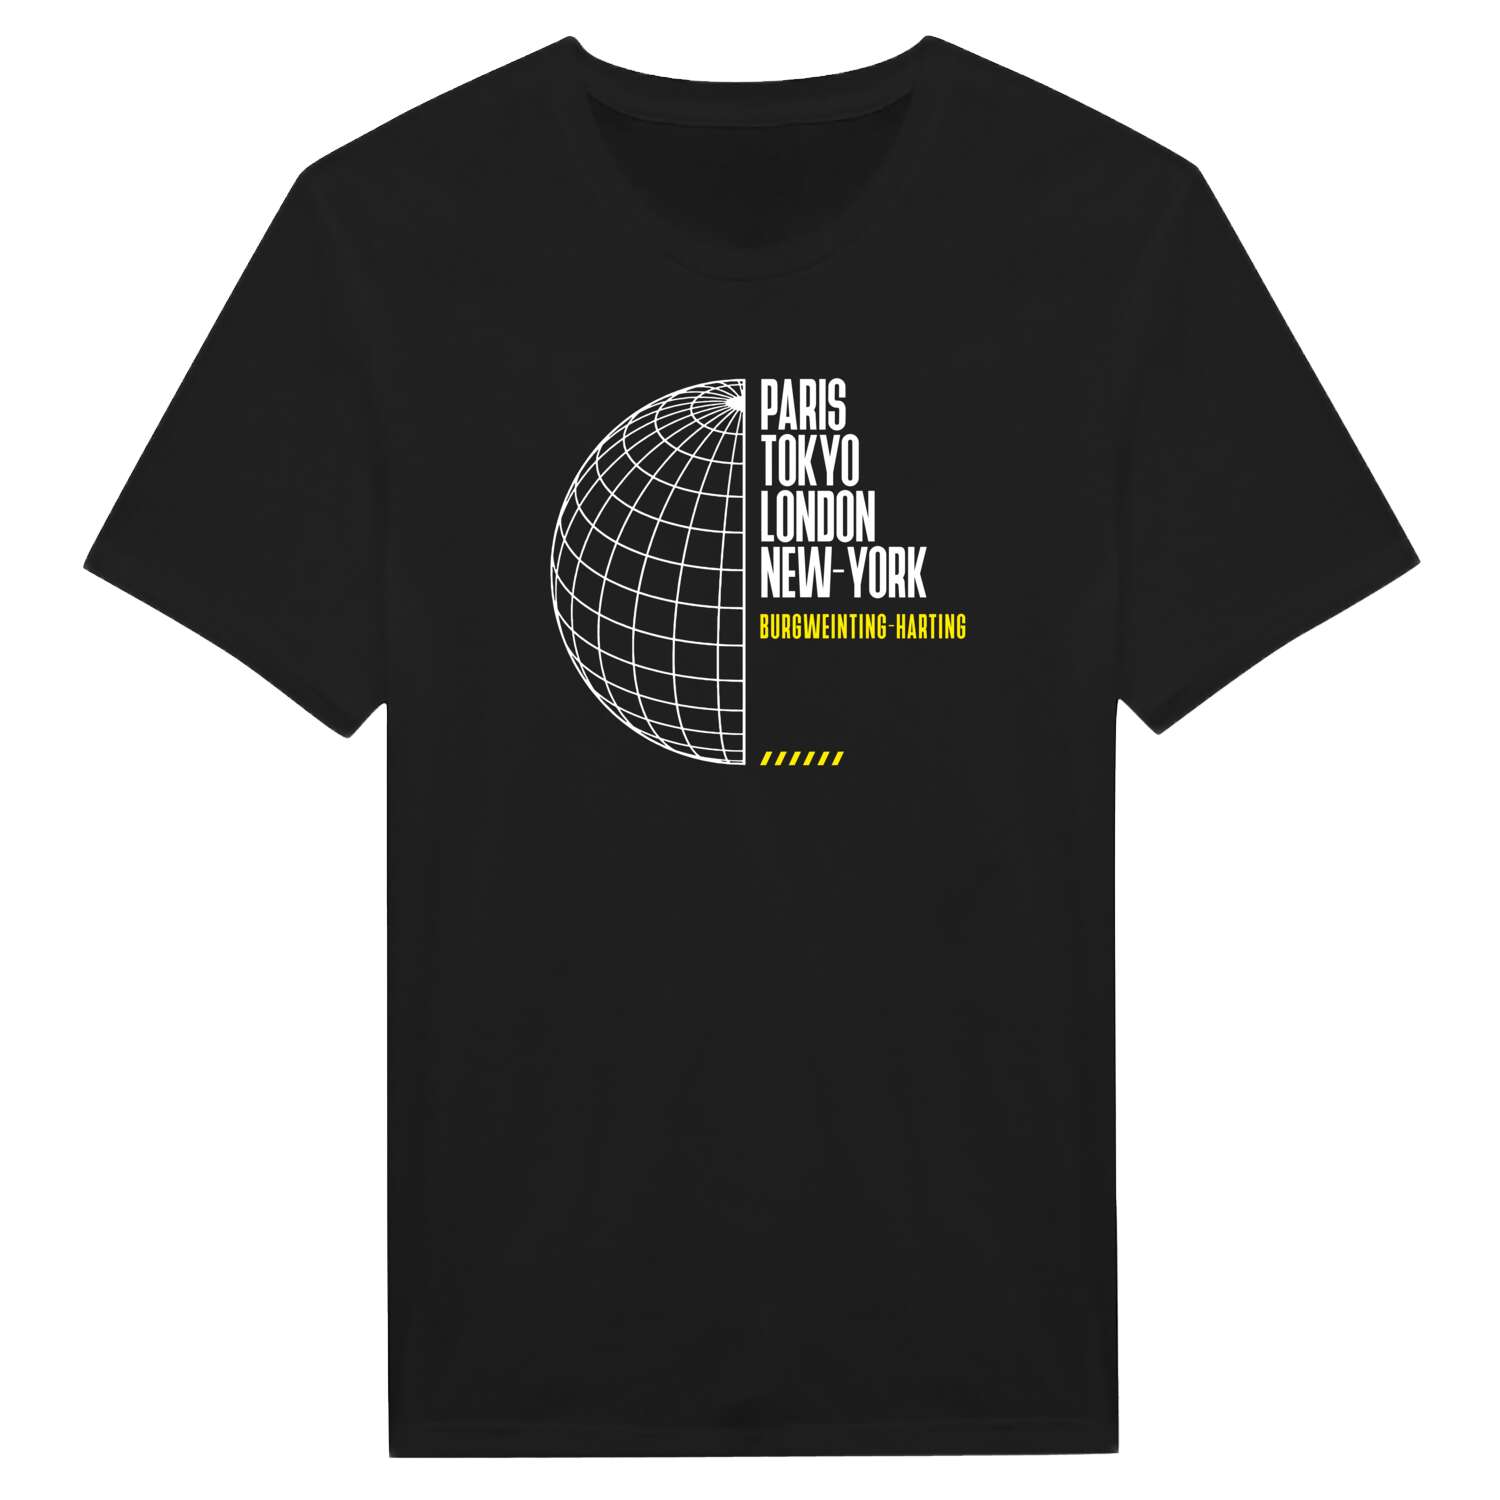 Burgweinting-Harting T-Shirt »Paris Tokyo London«